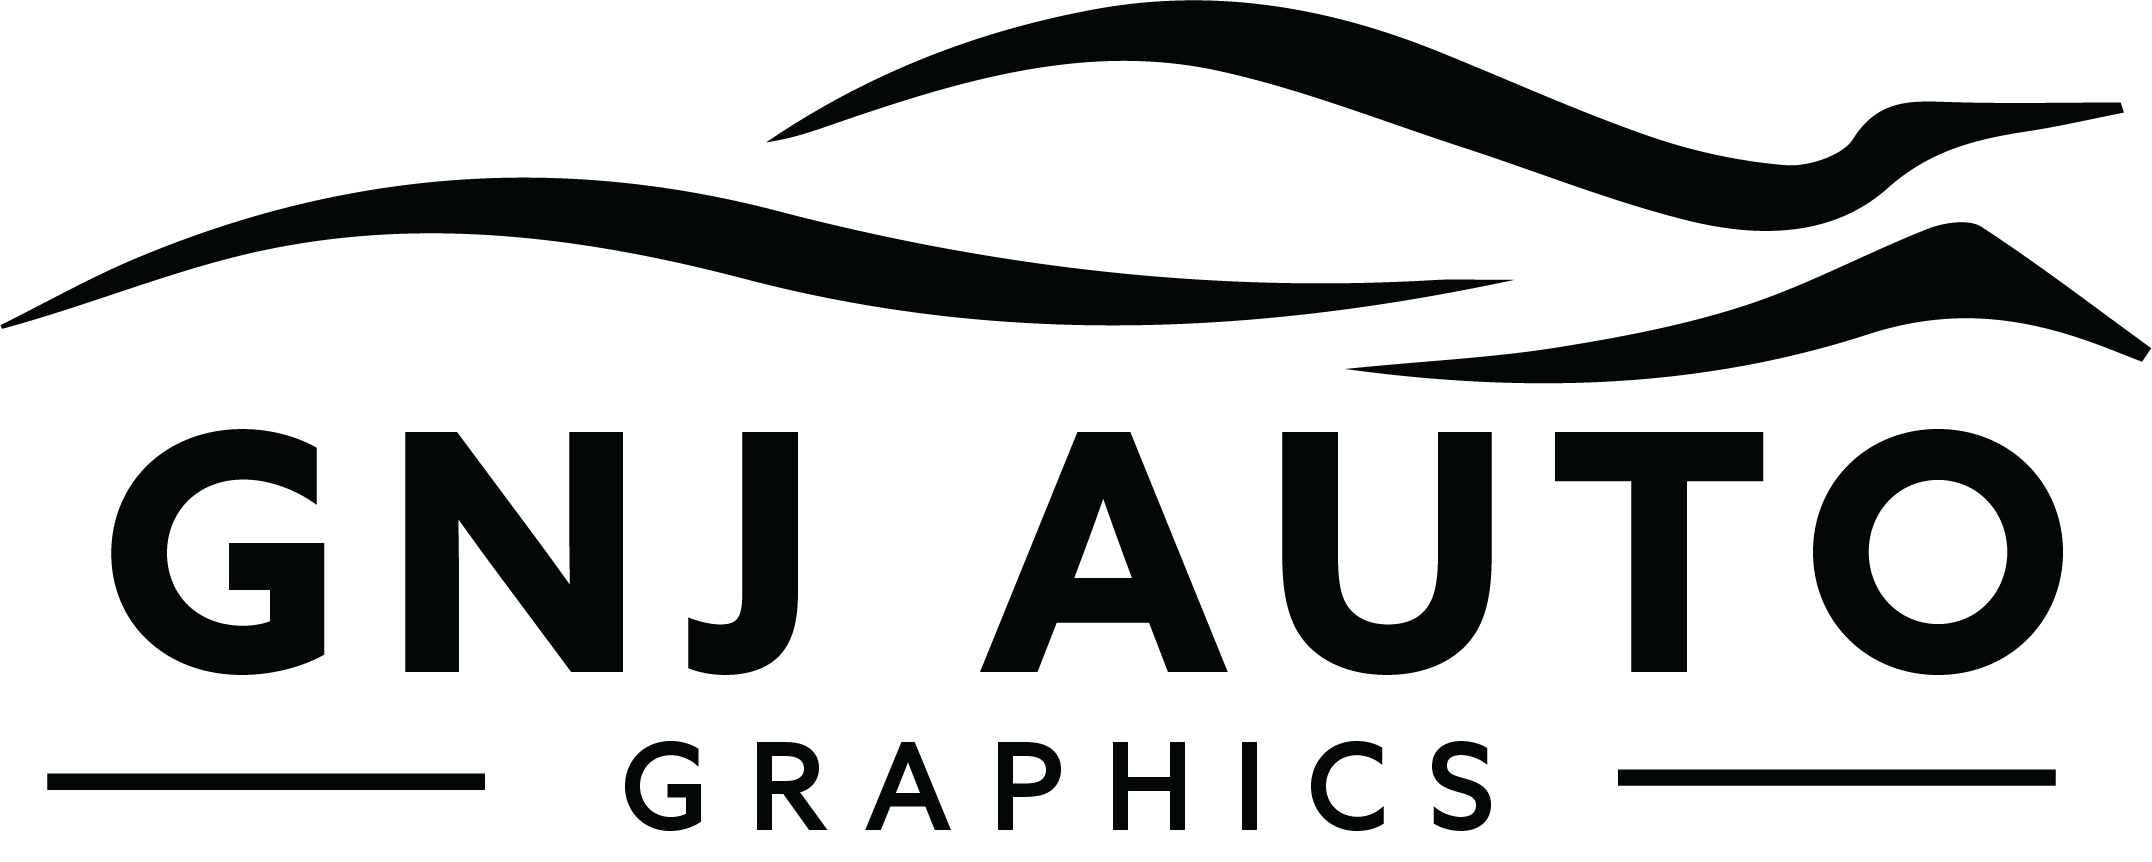 GNJ Auto Graphics